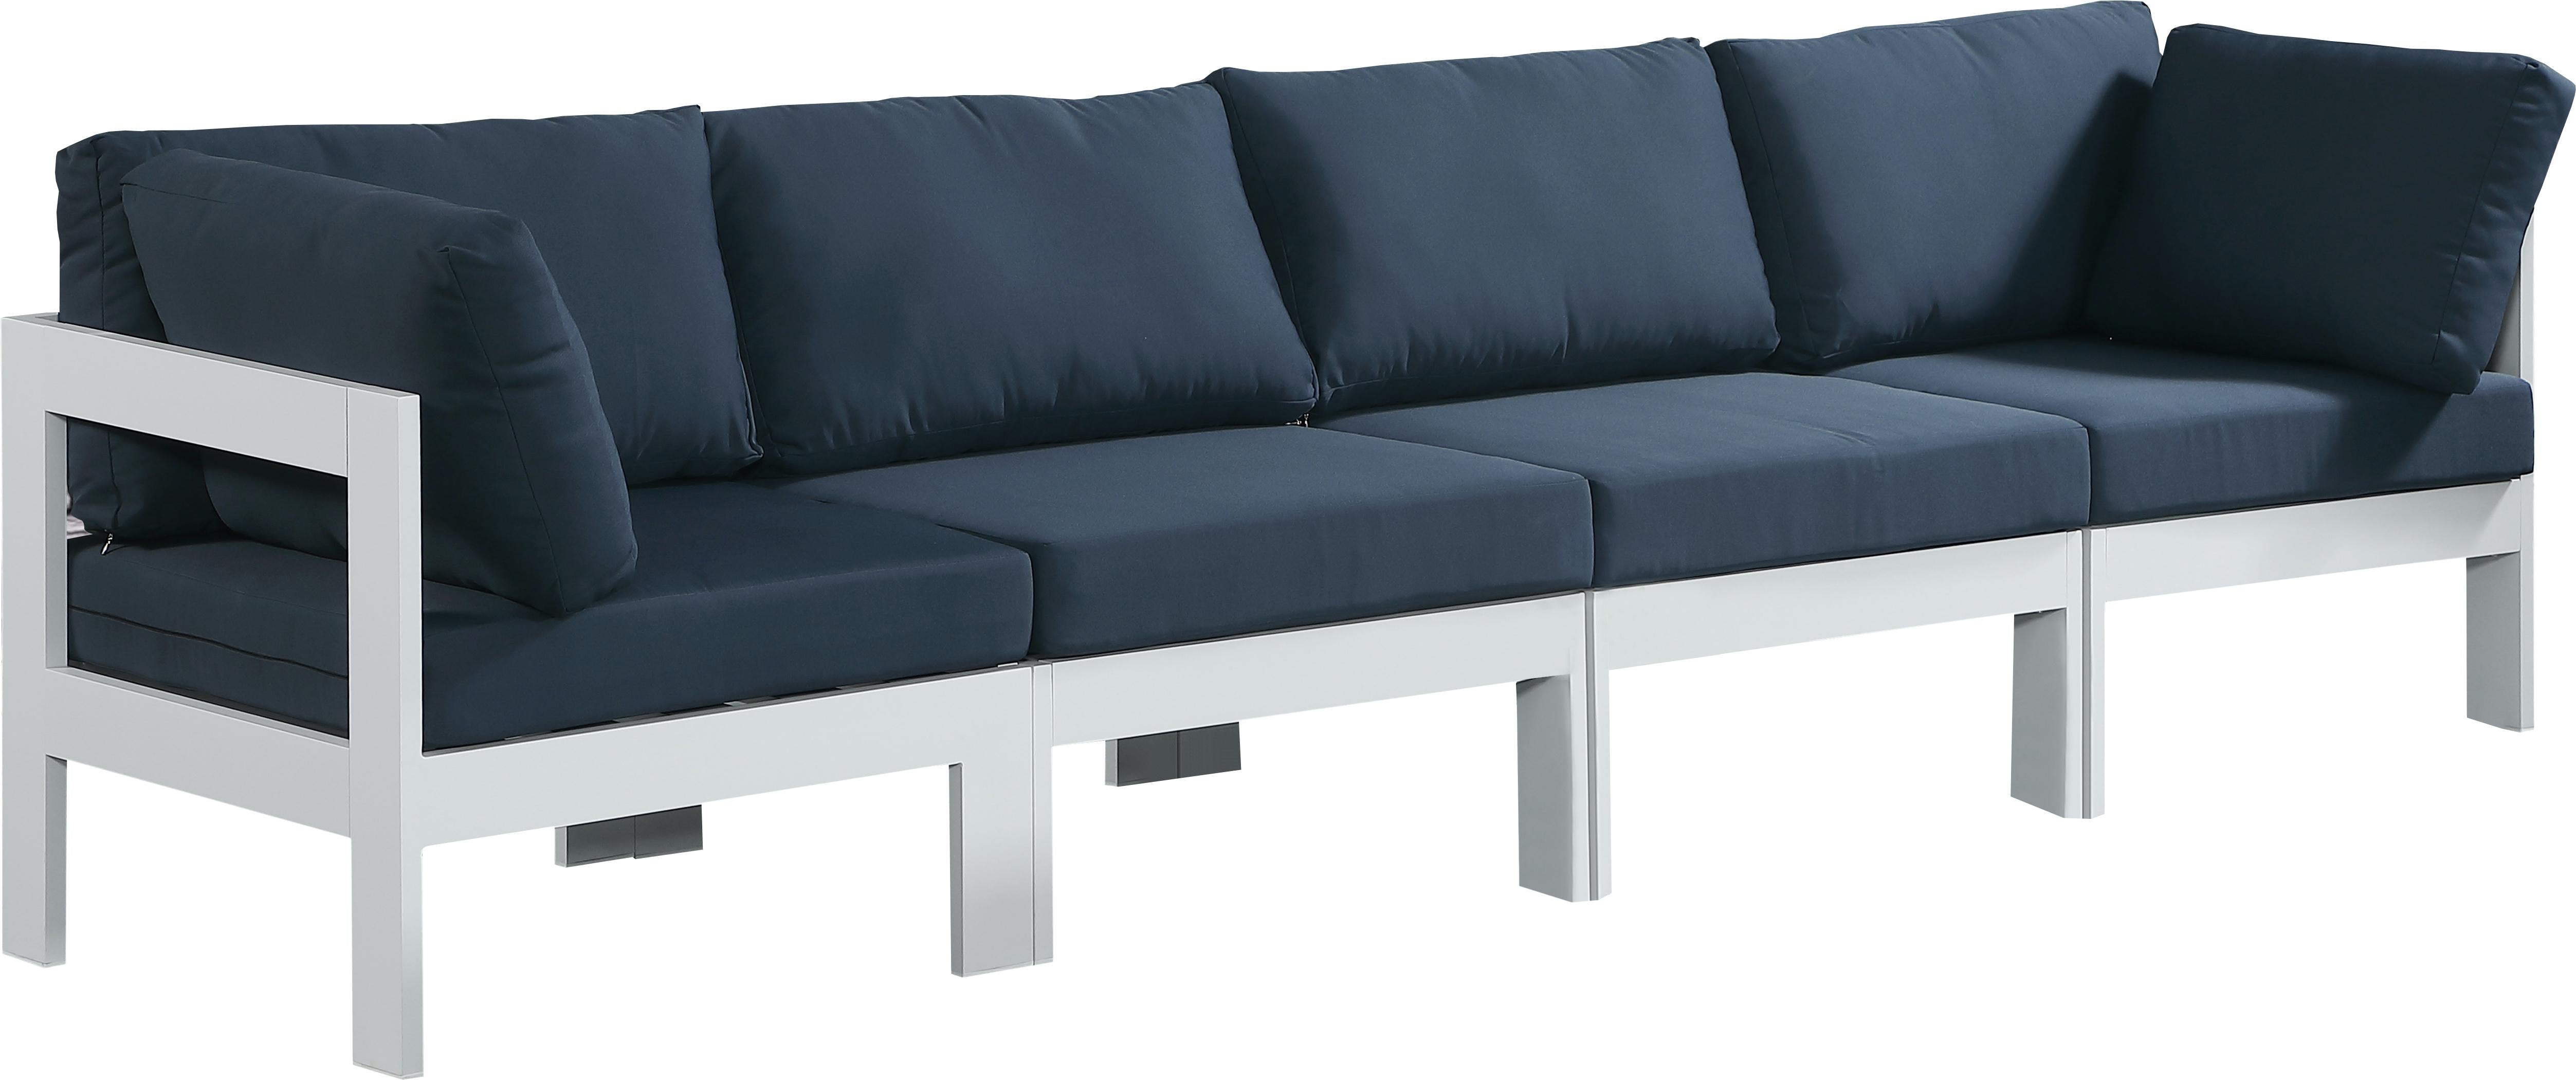 Nizuc Navy Waterproof Fabric Outdoor Patio Modular Sofa image